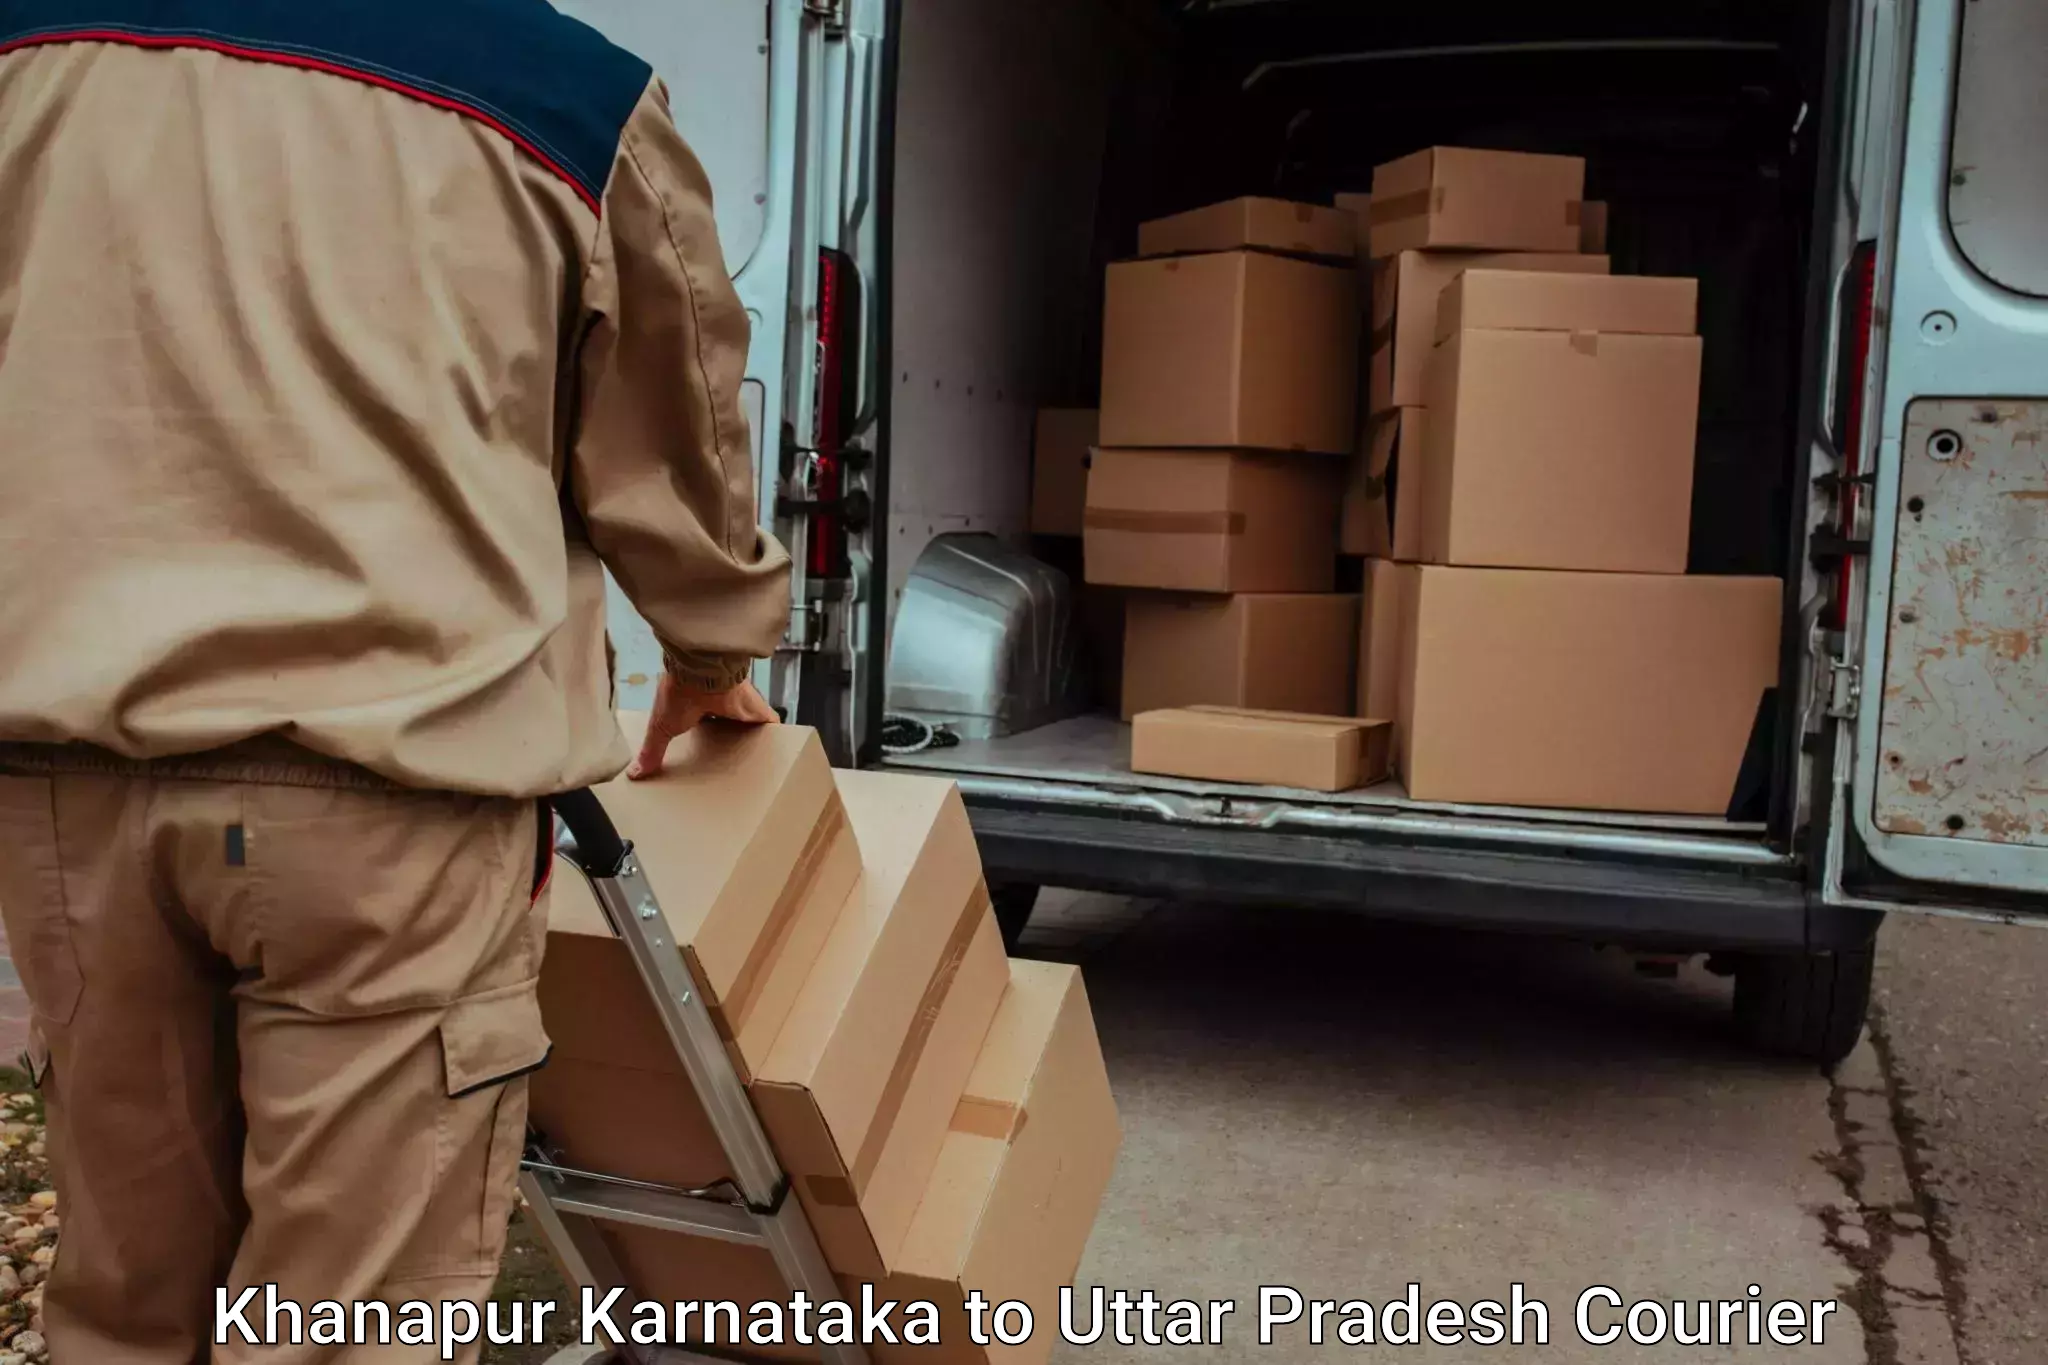 Furniture delivery service Khanapur Karnataka to Baheri